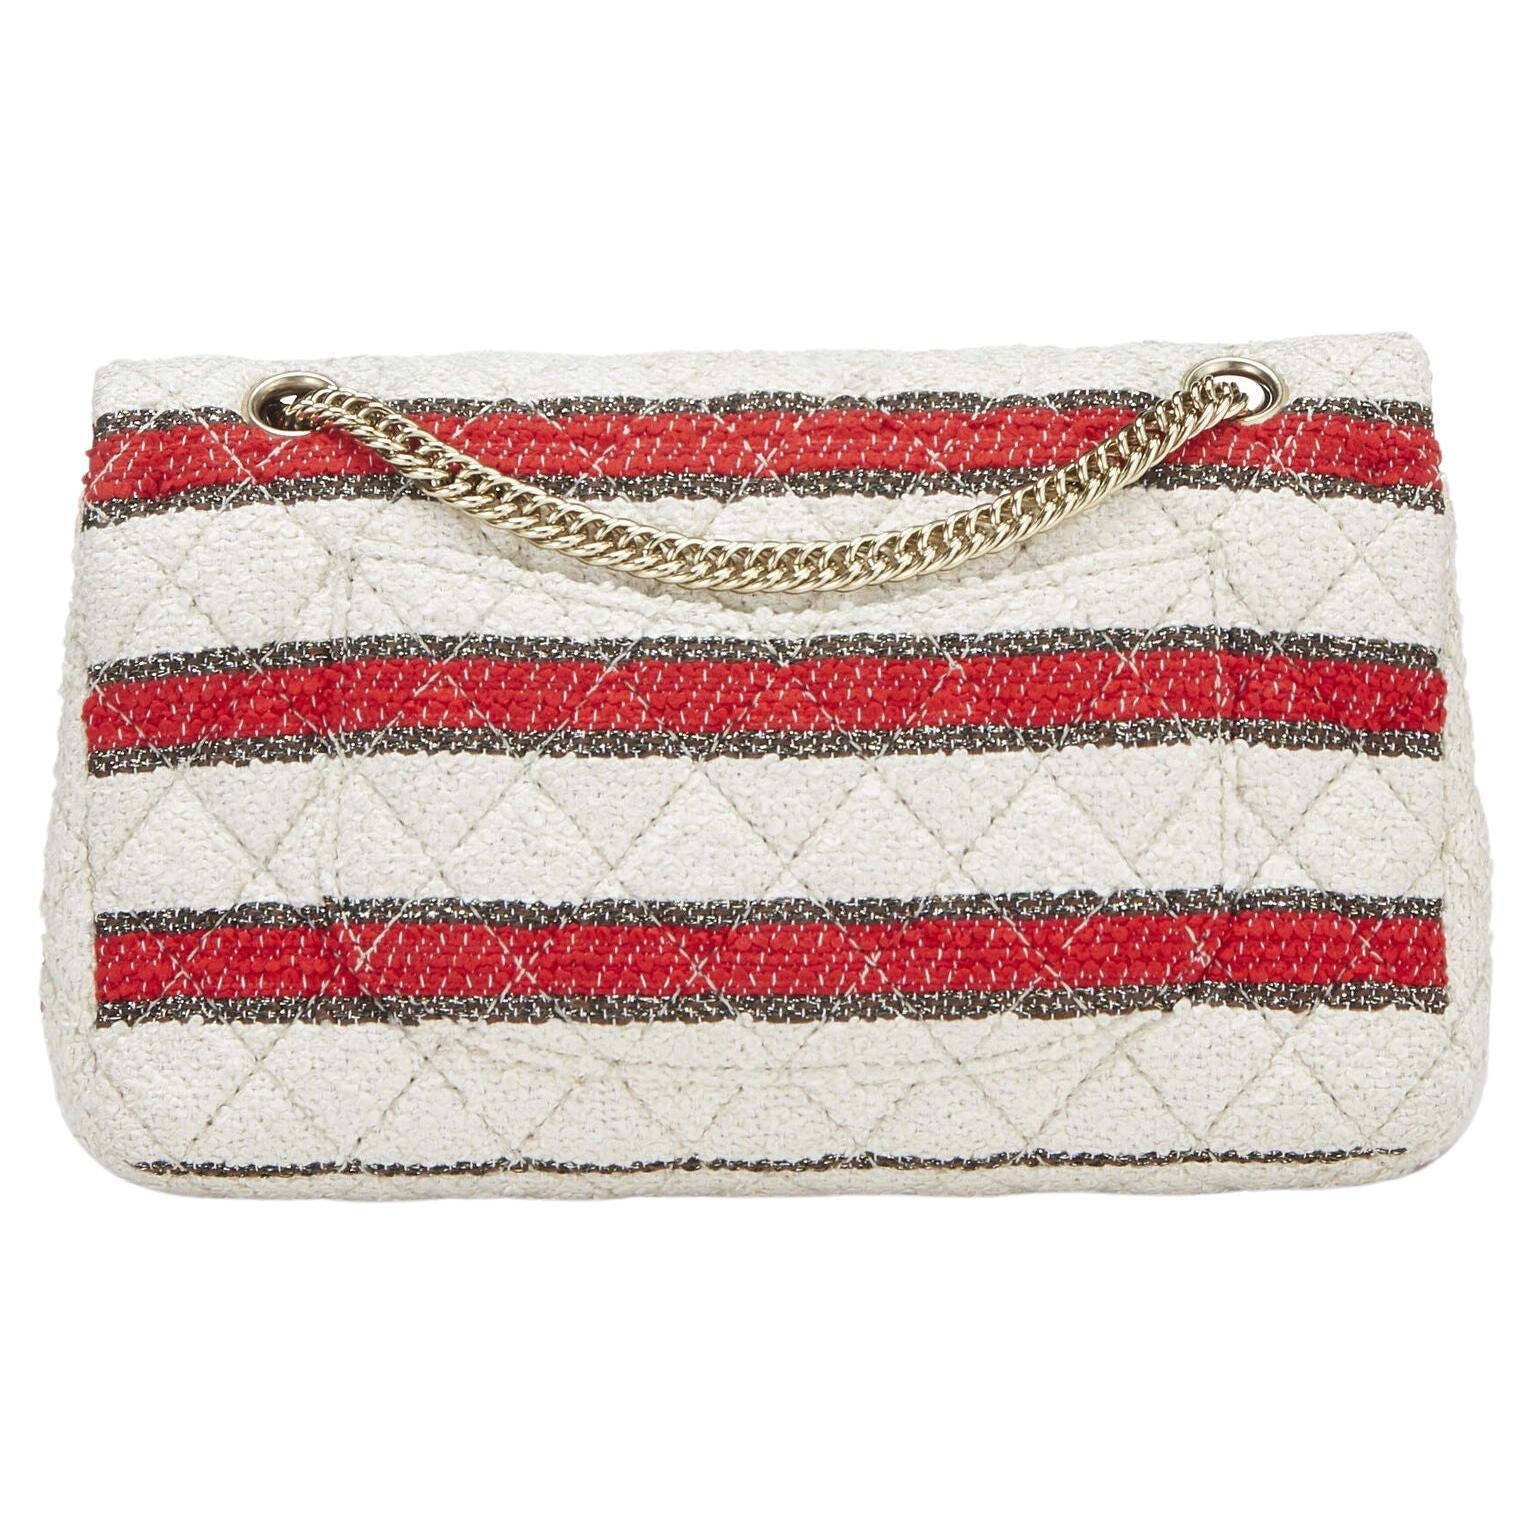 Chanel Rare 2009 Medium Classic Flap Bag Red White Stripe Tweed Shoulder Bag  For Sale 2